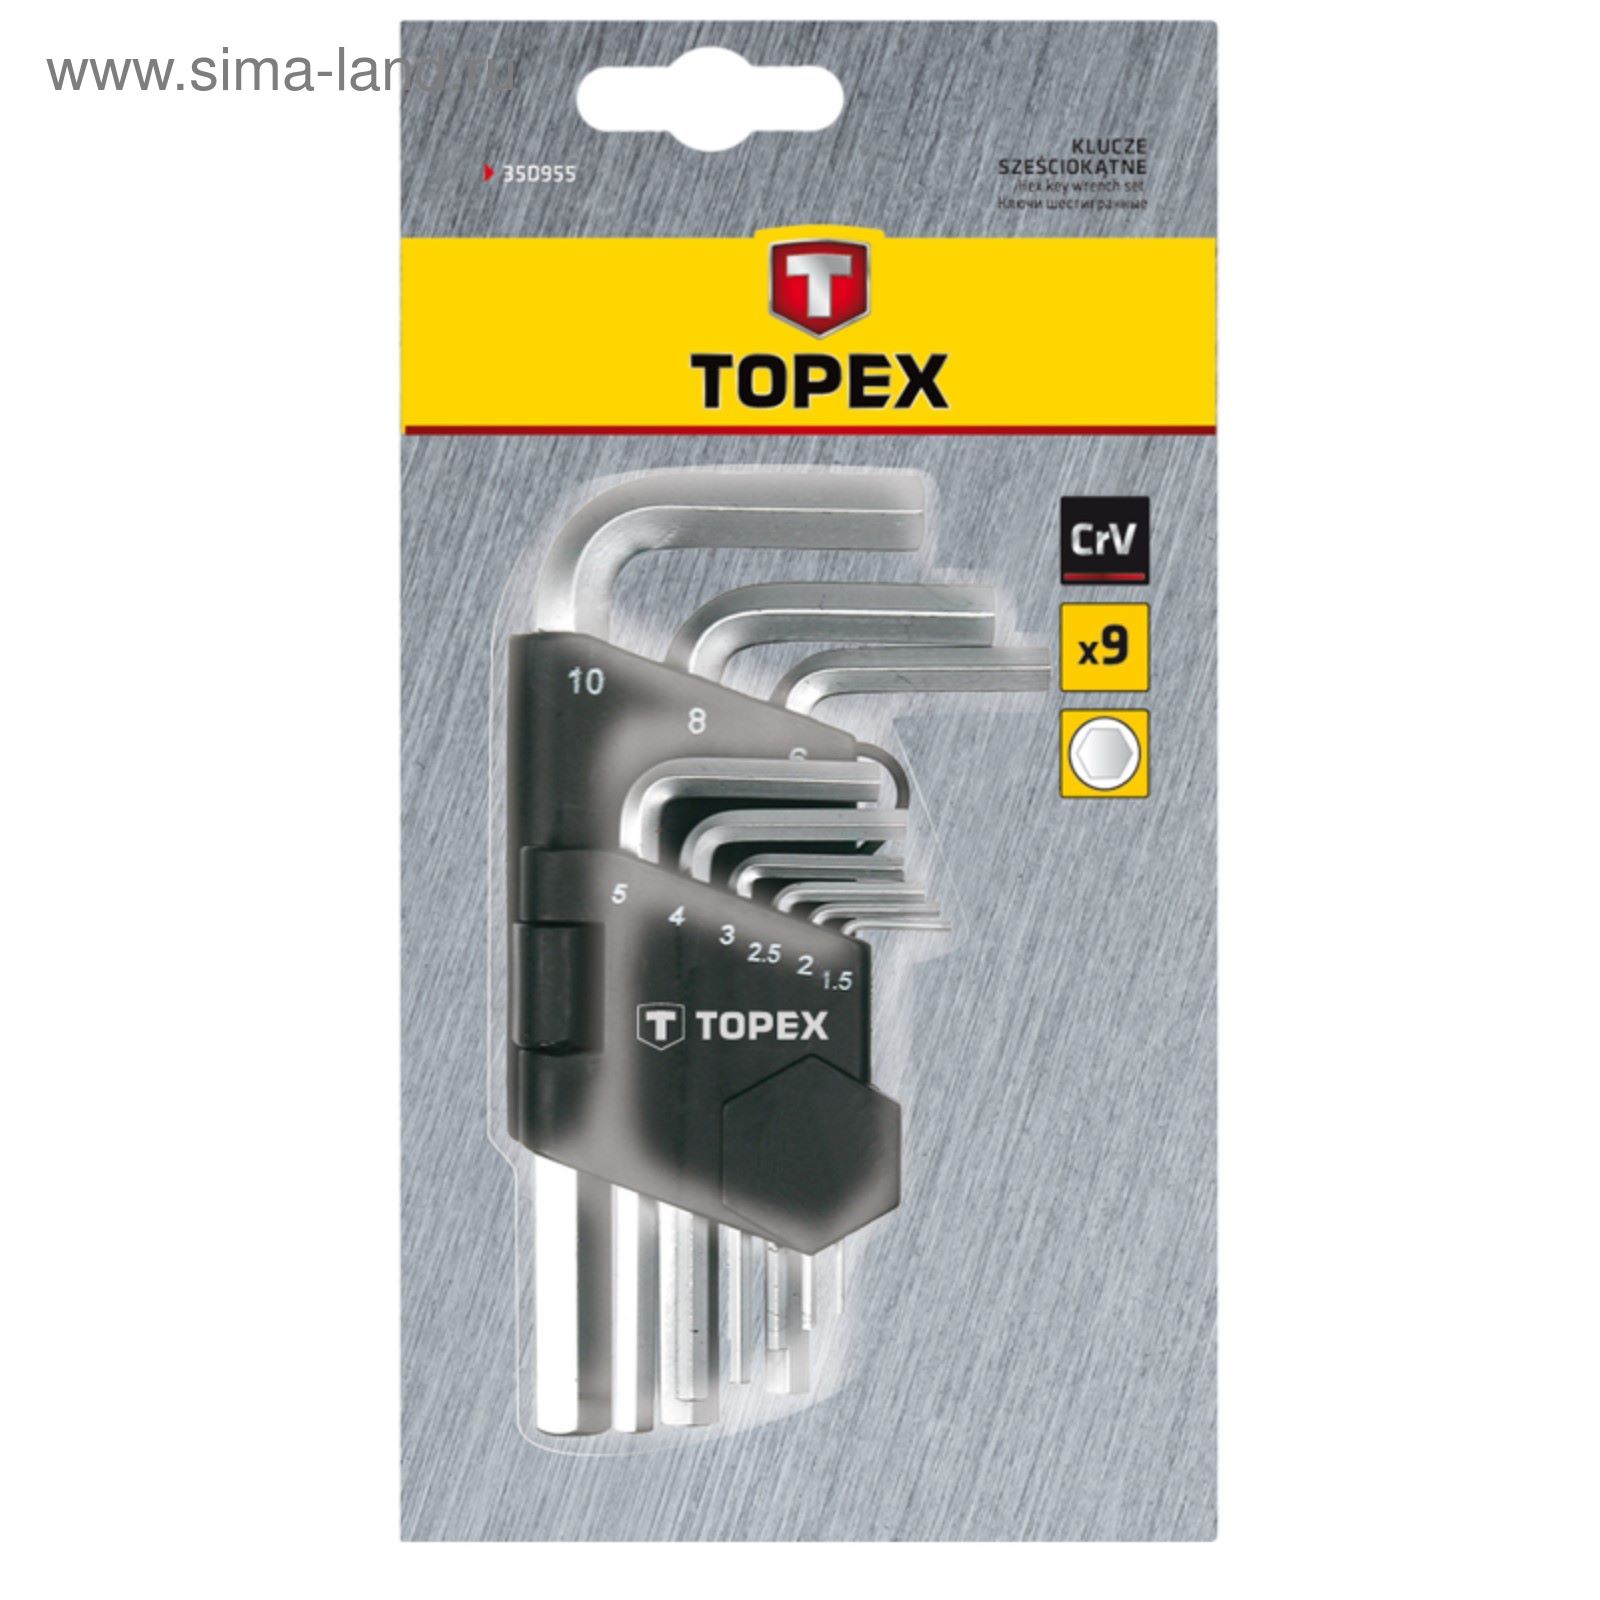 Ключи шестигранные TOPEX, 1.5-10 мм, набор 9 шт.